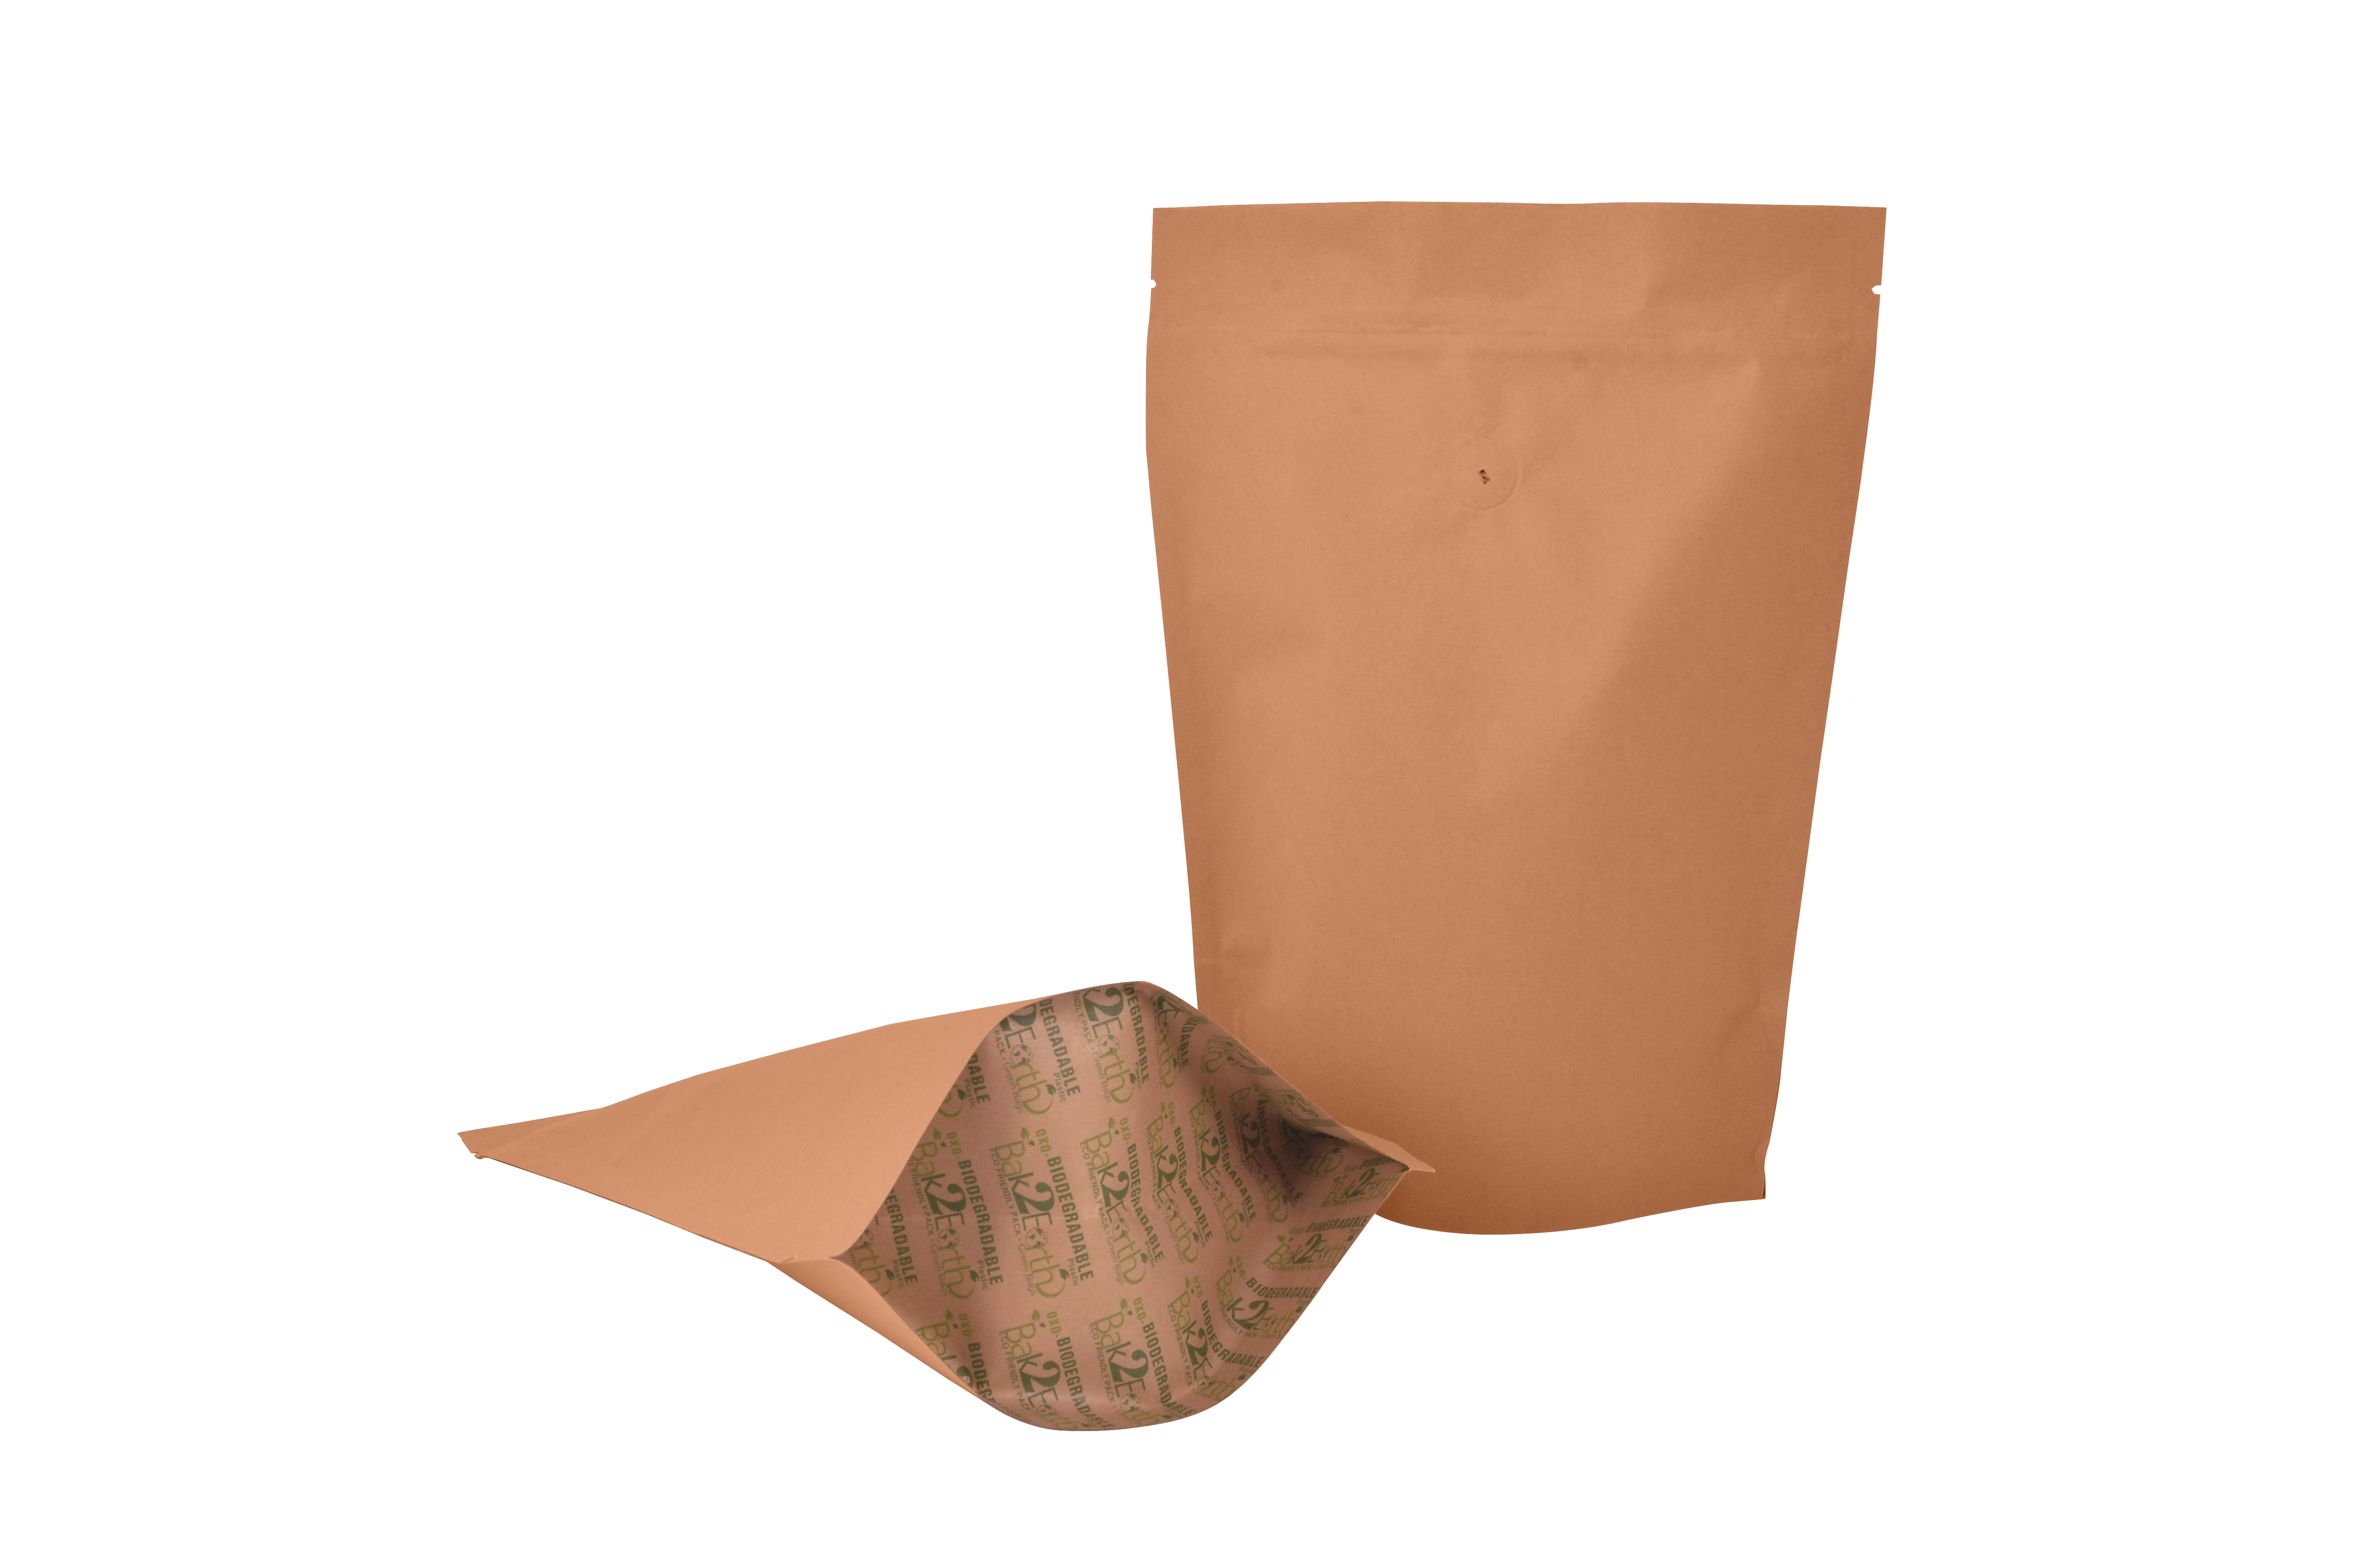 Oxo-degradable bags